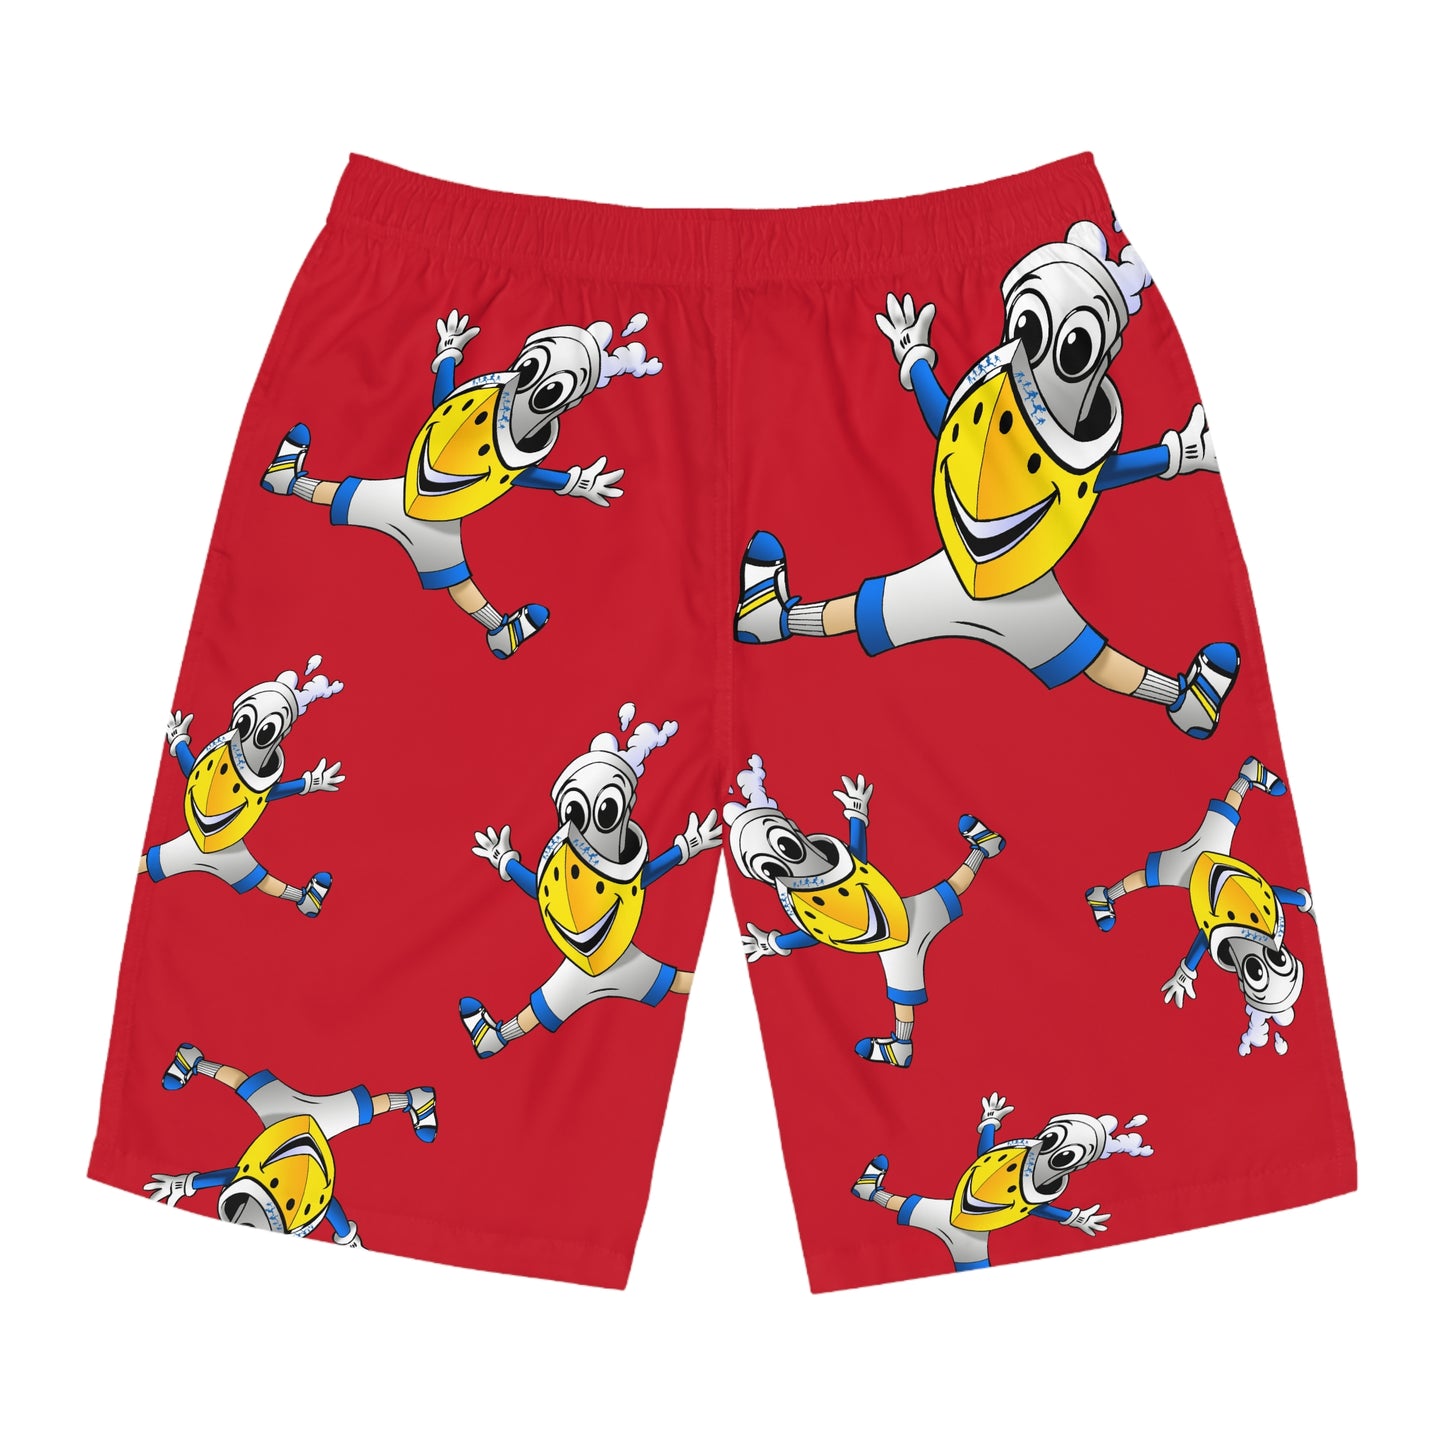 Crazy BUDDY CRUISE Men's DARK RED Board Shorts